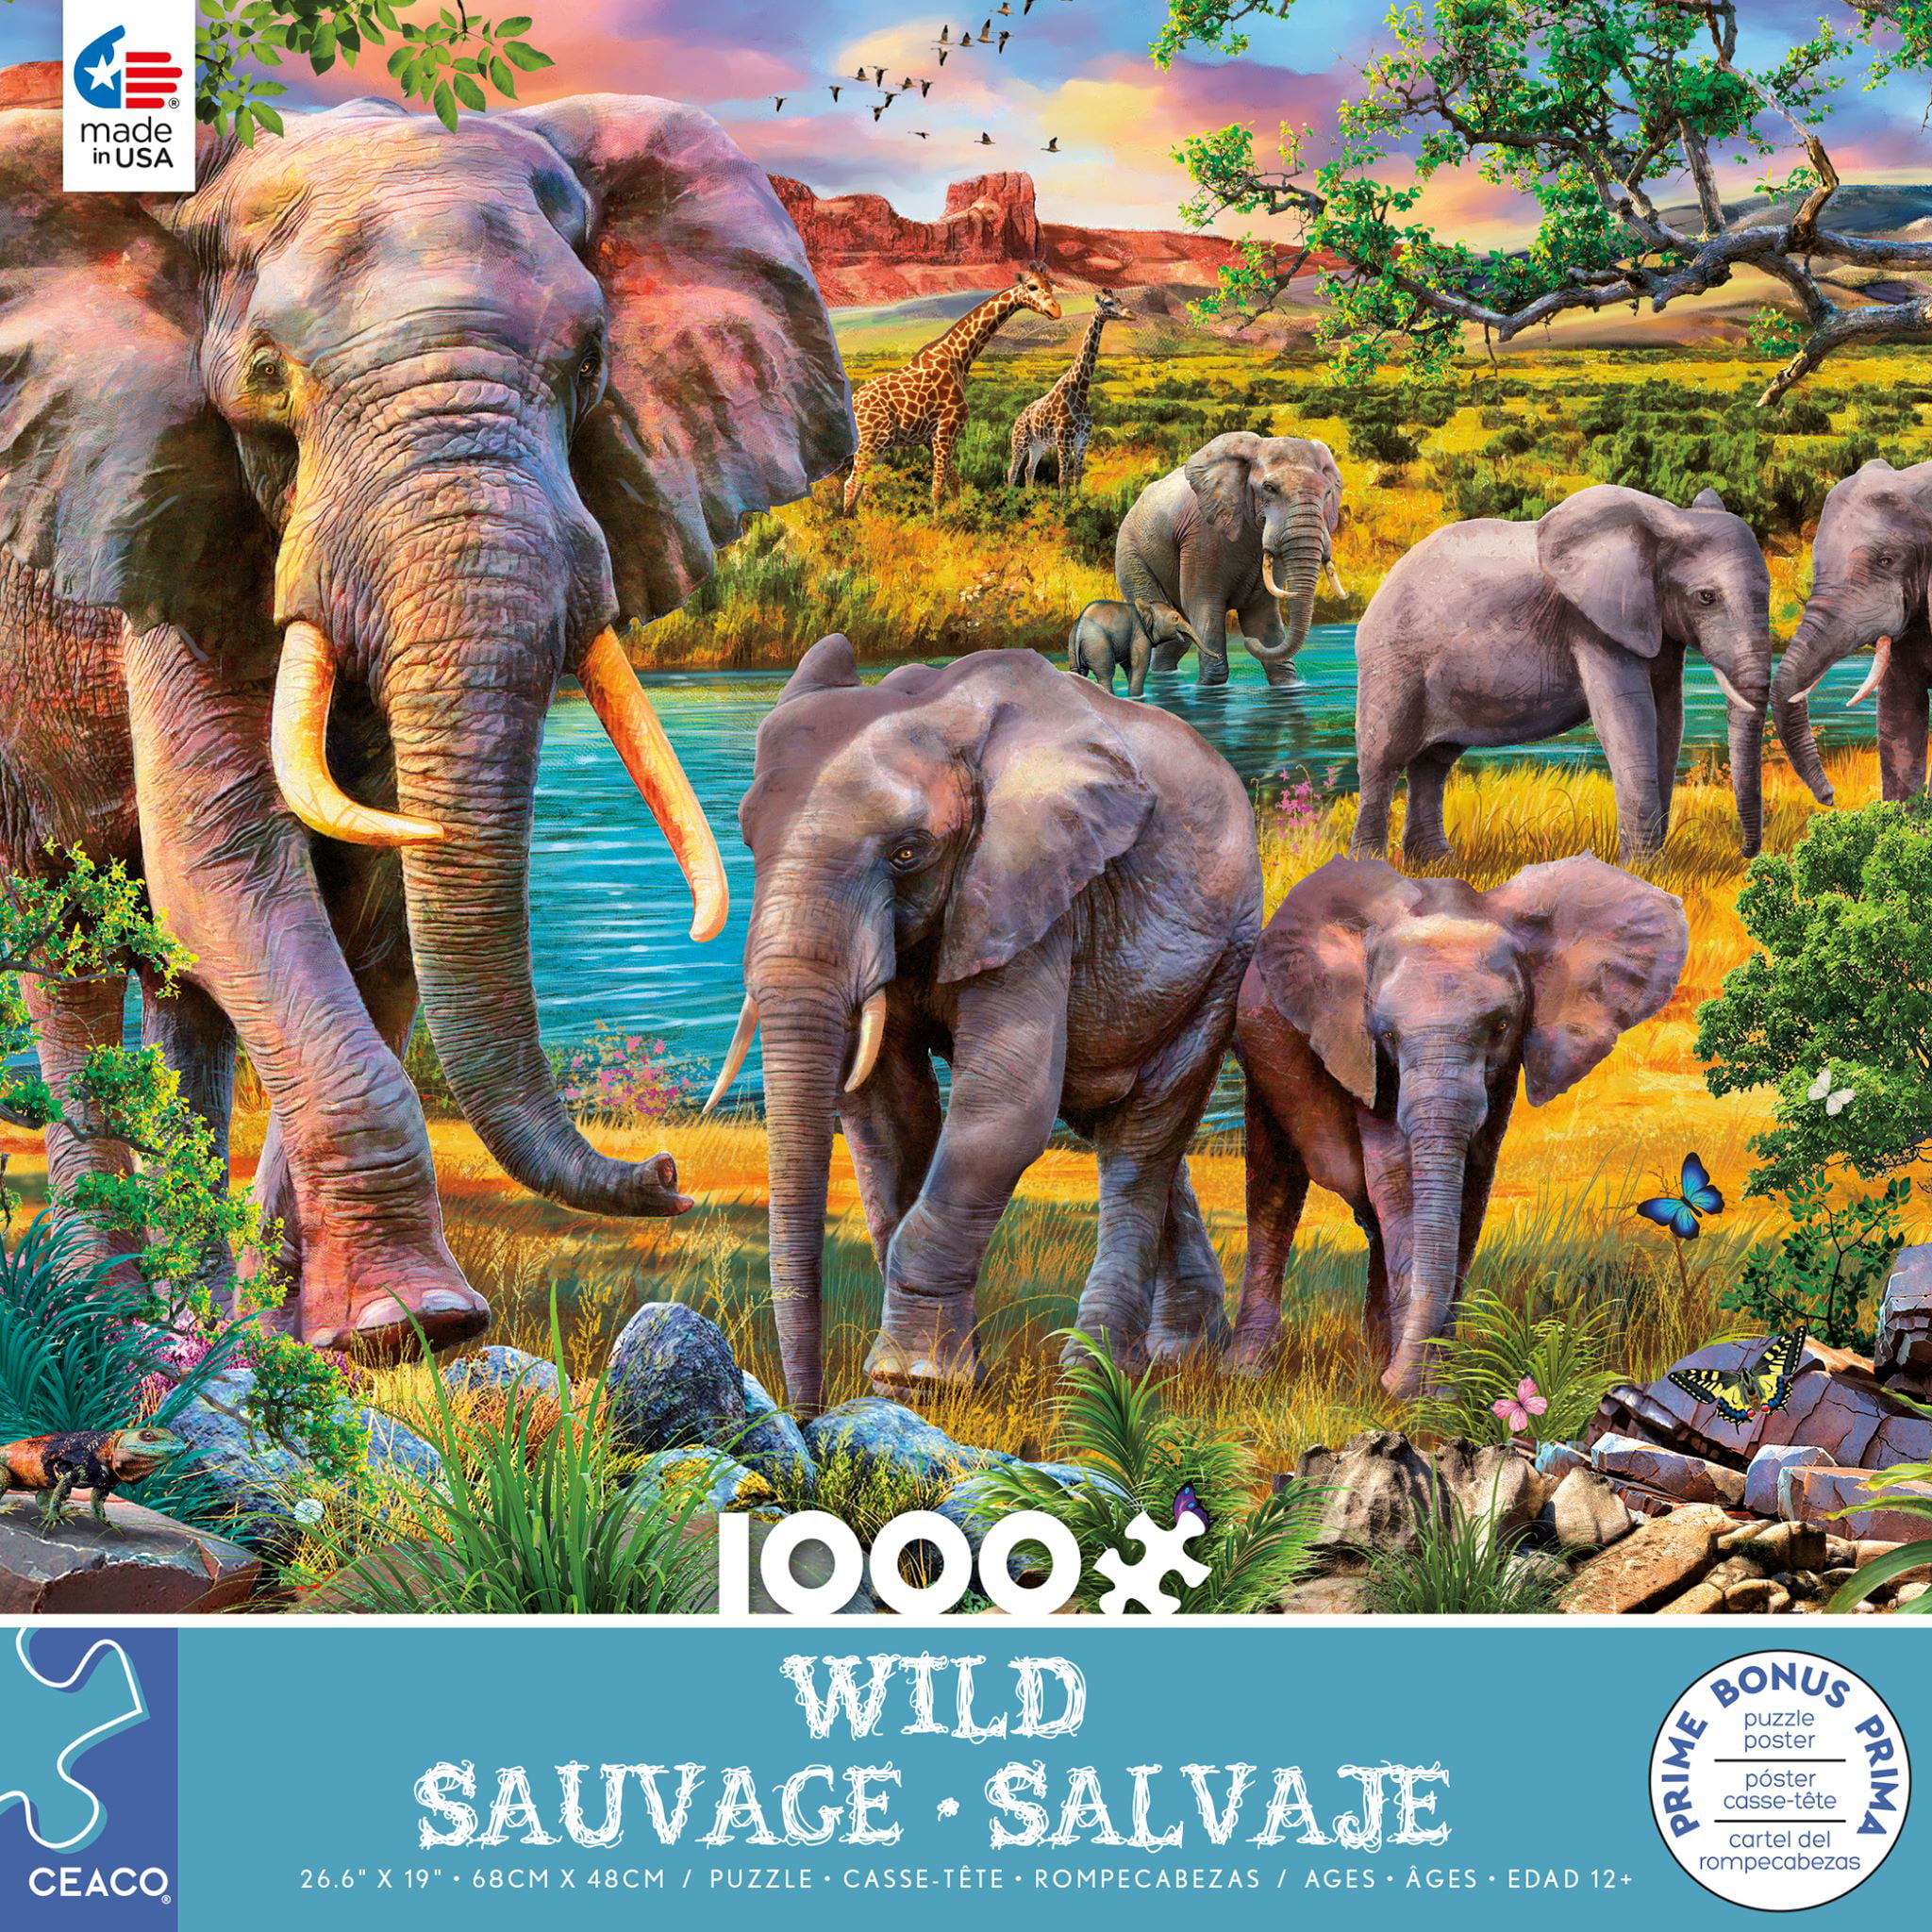 ⇨OFERTA Escarpines Fresk Elefantes 2023 - MiniCoco